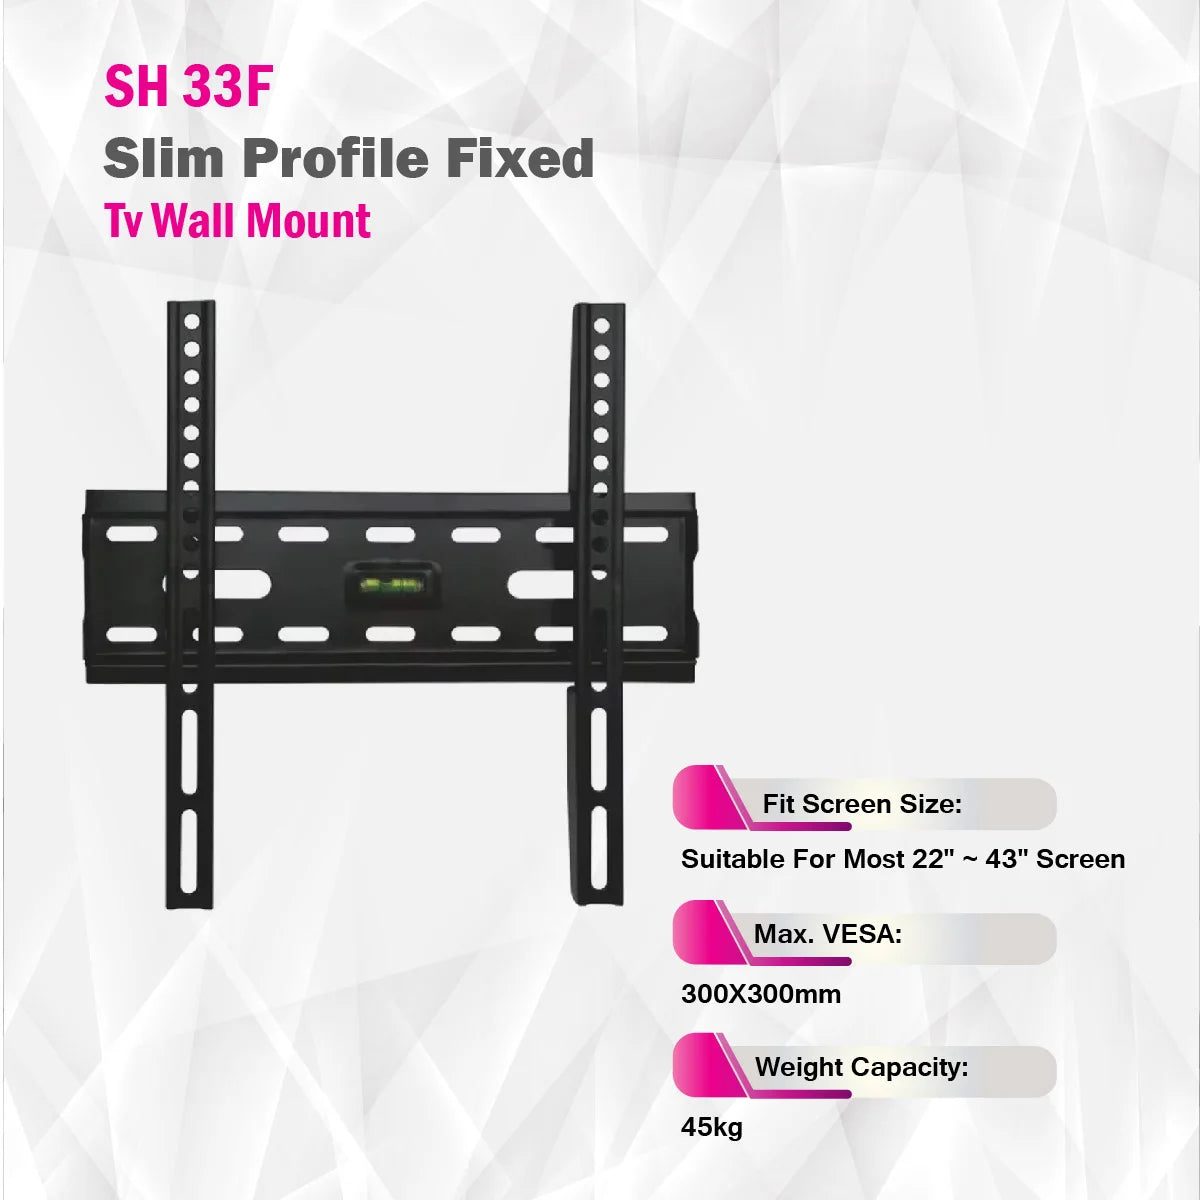 SkillTech - SH 33F - Slim Profile Fixed Tv Wall Mount